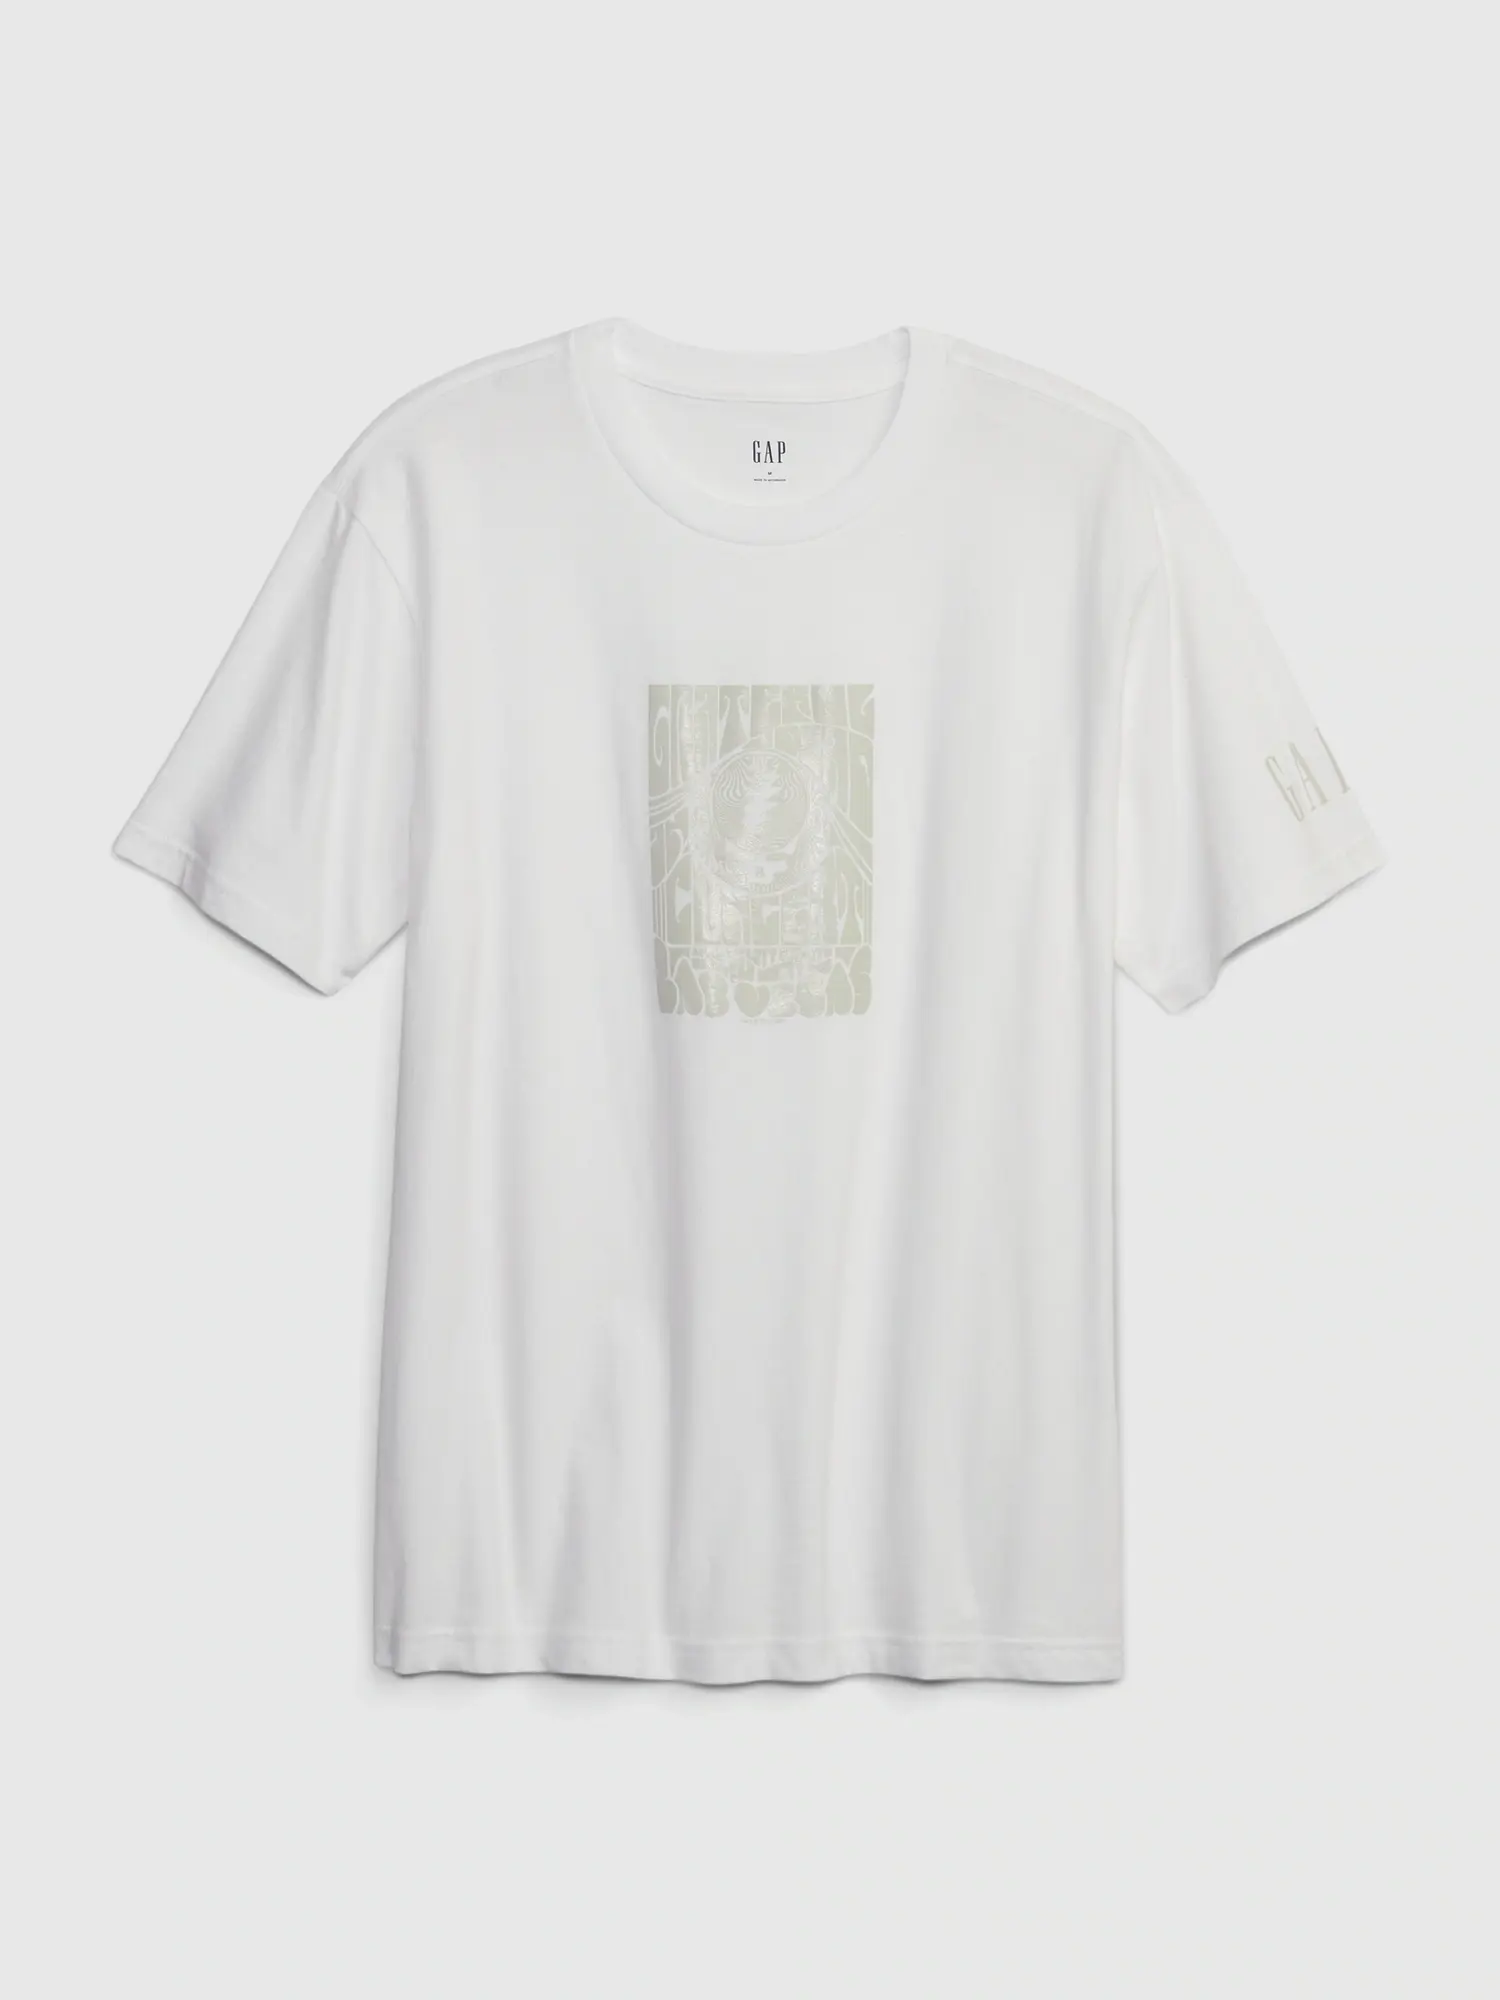 Gap Grateful Dead Graphic T-Shirt white. 1